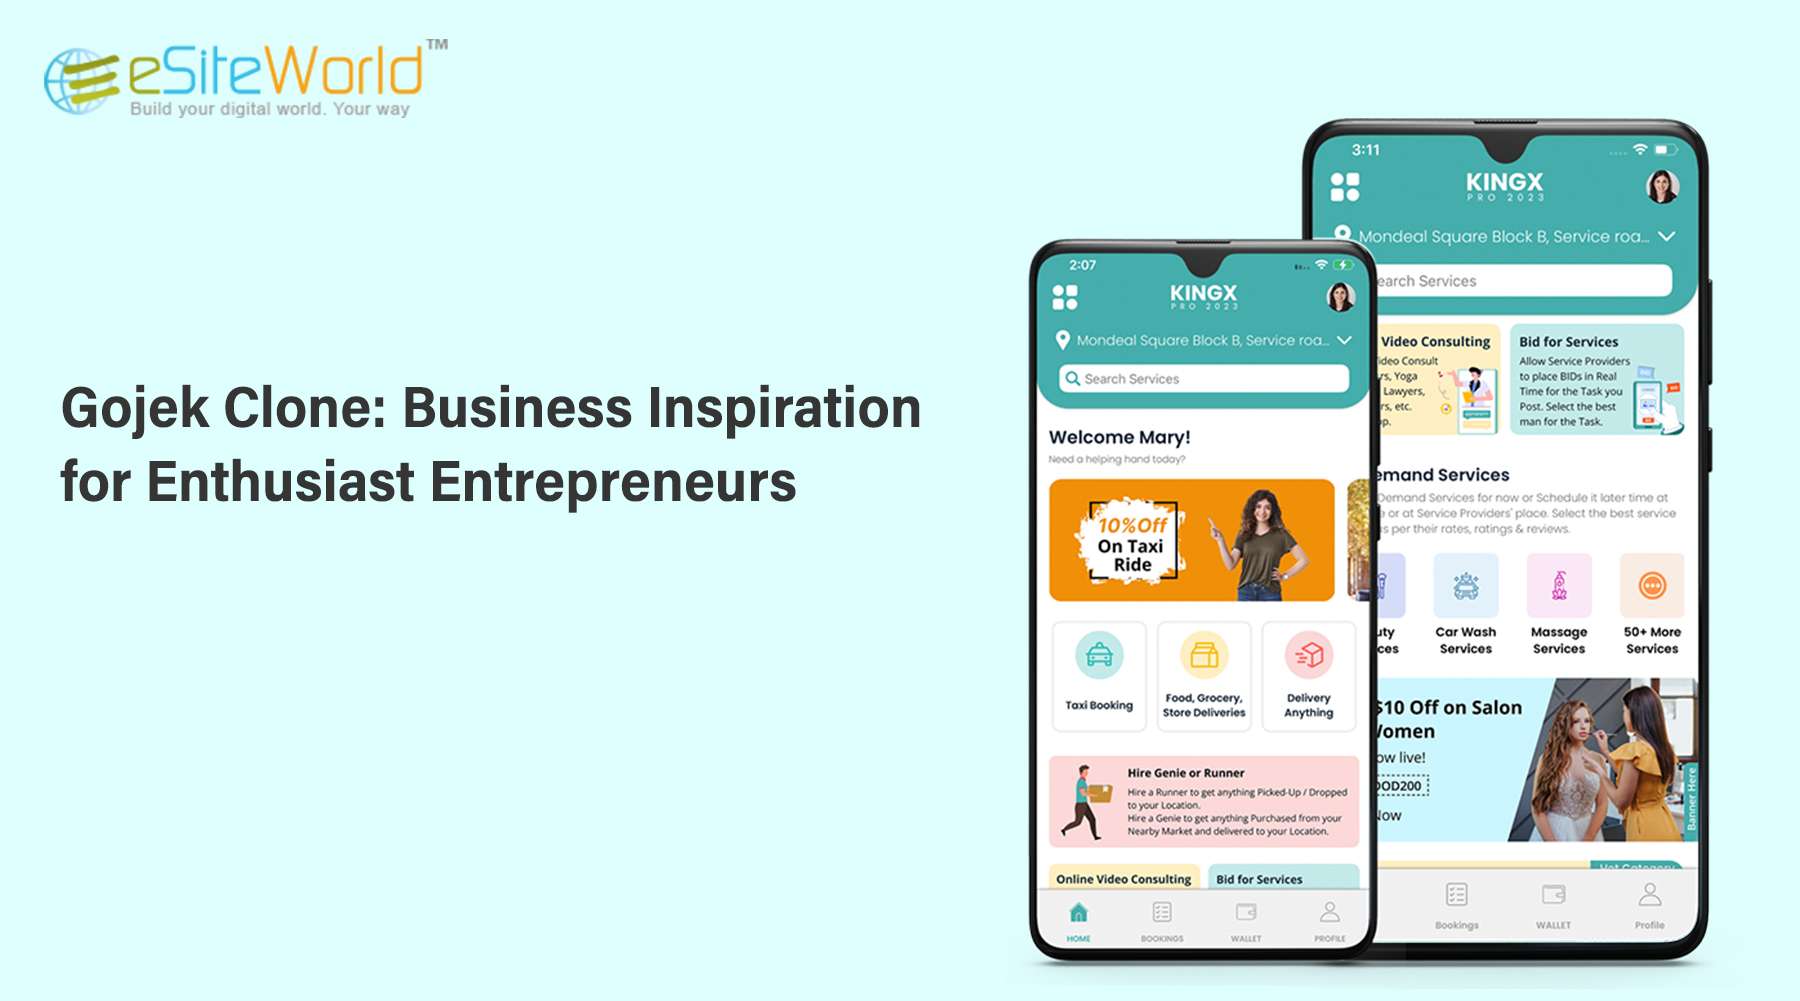 gojek-clone-business-inspiration-for-enthusiast-entrepreneurs